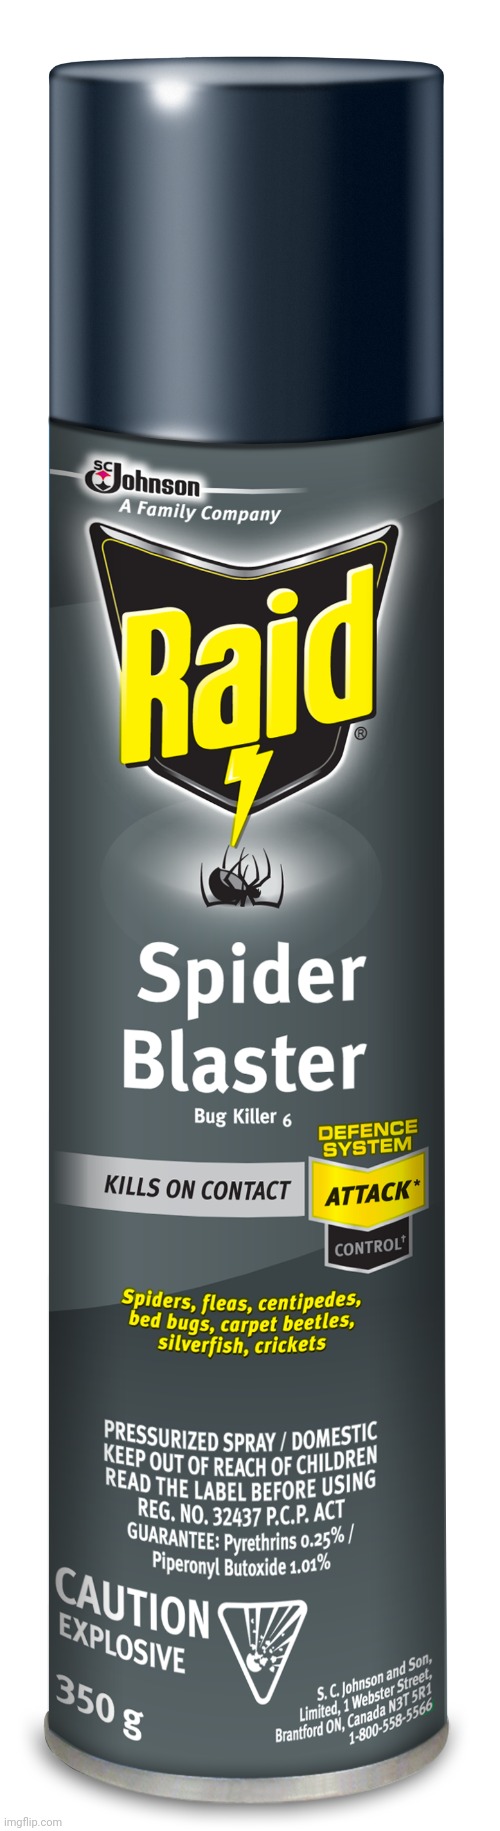 Raid Spider Blaster Killer insecticide spray | image tagged in raid spider blaster killer insecticide spray | made w/ Imgflip meme maker